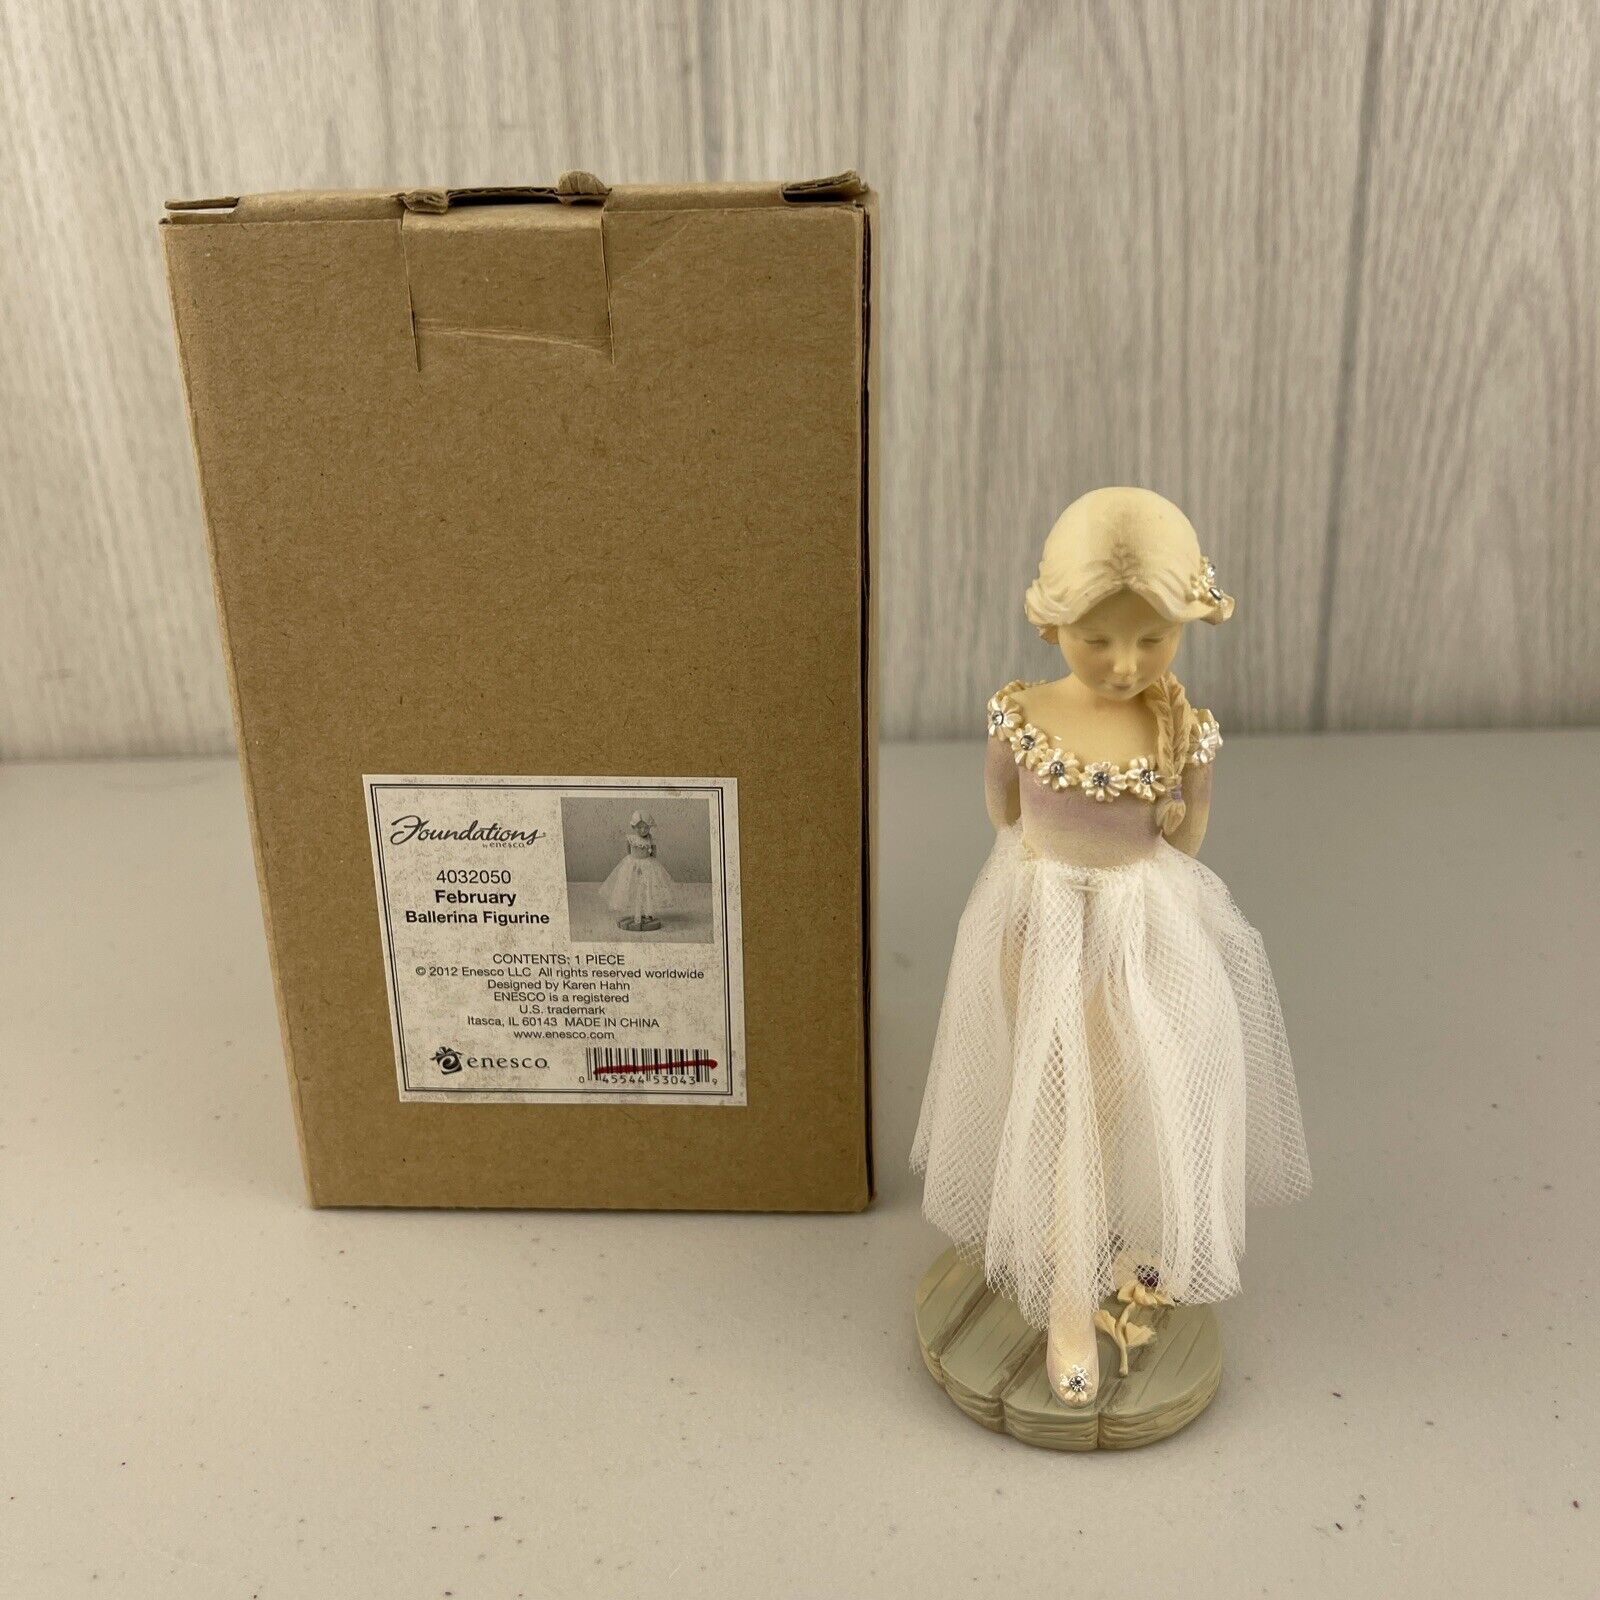 ENESCO Foundations February Ballerina Figurine 4032050 Original Box